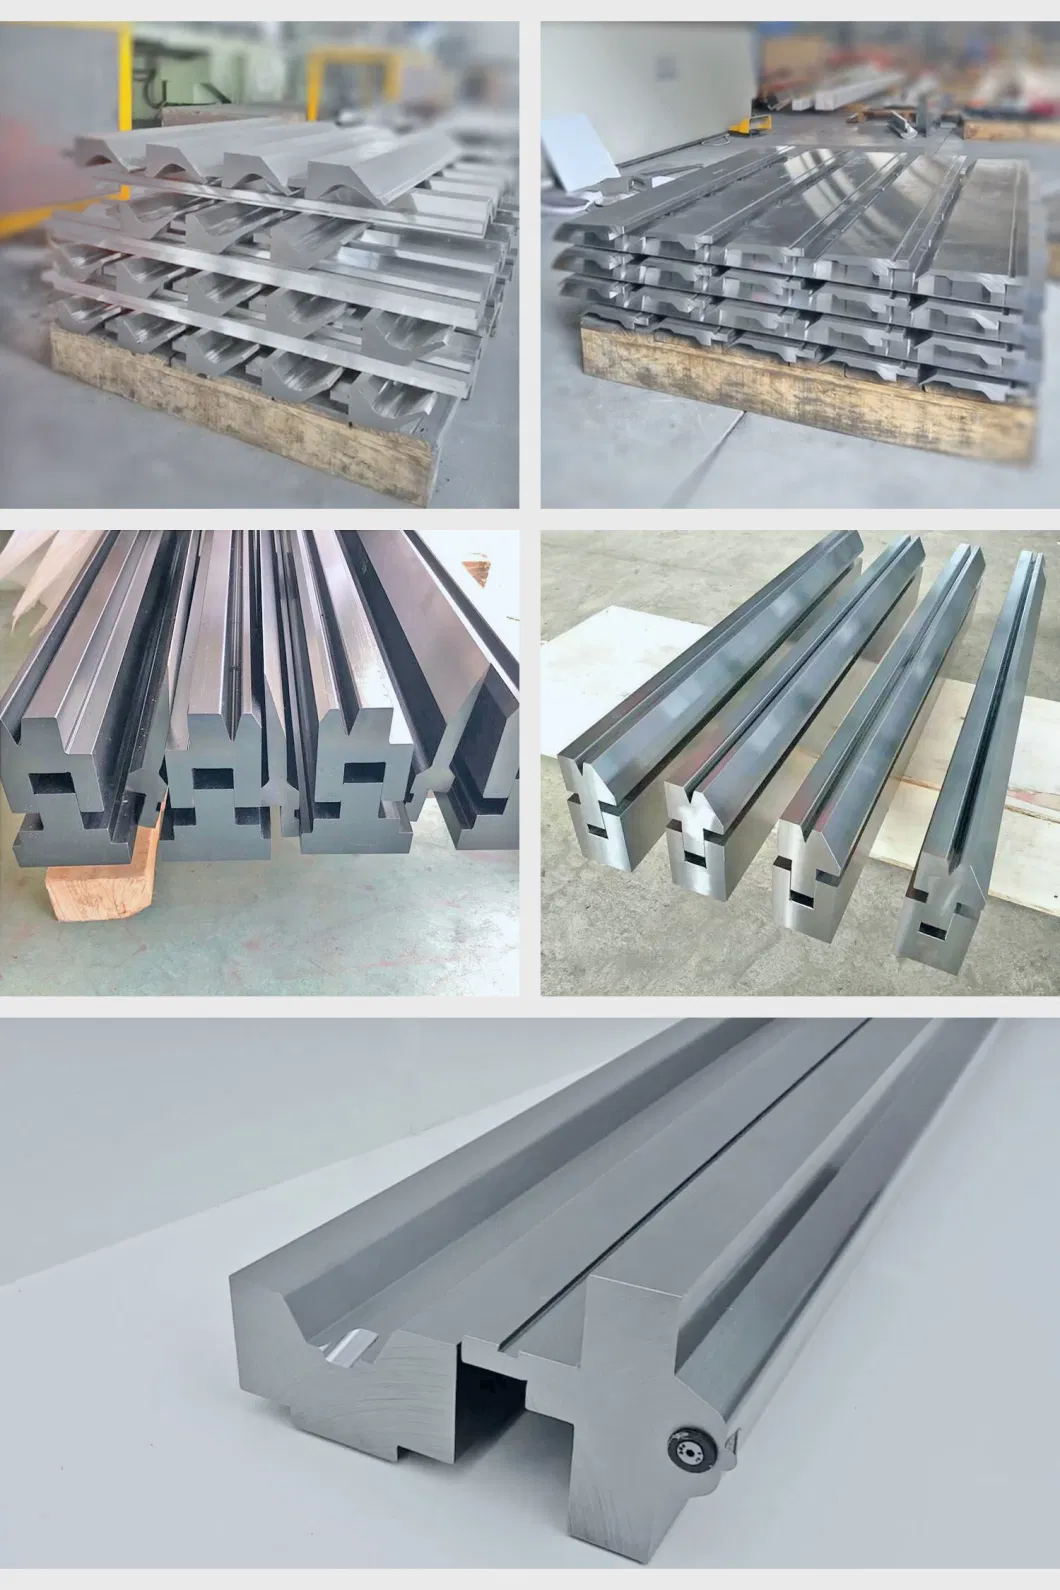 Hydraulic CNC Press Brake Bending Machine Tooling Punch Die for Sheet Metal Plate Bending Made in China